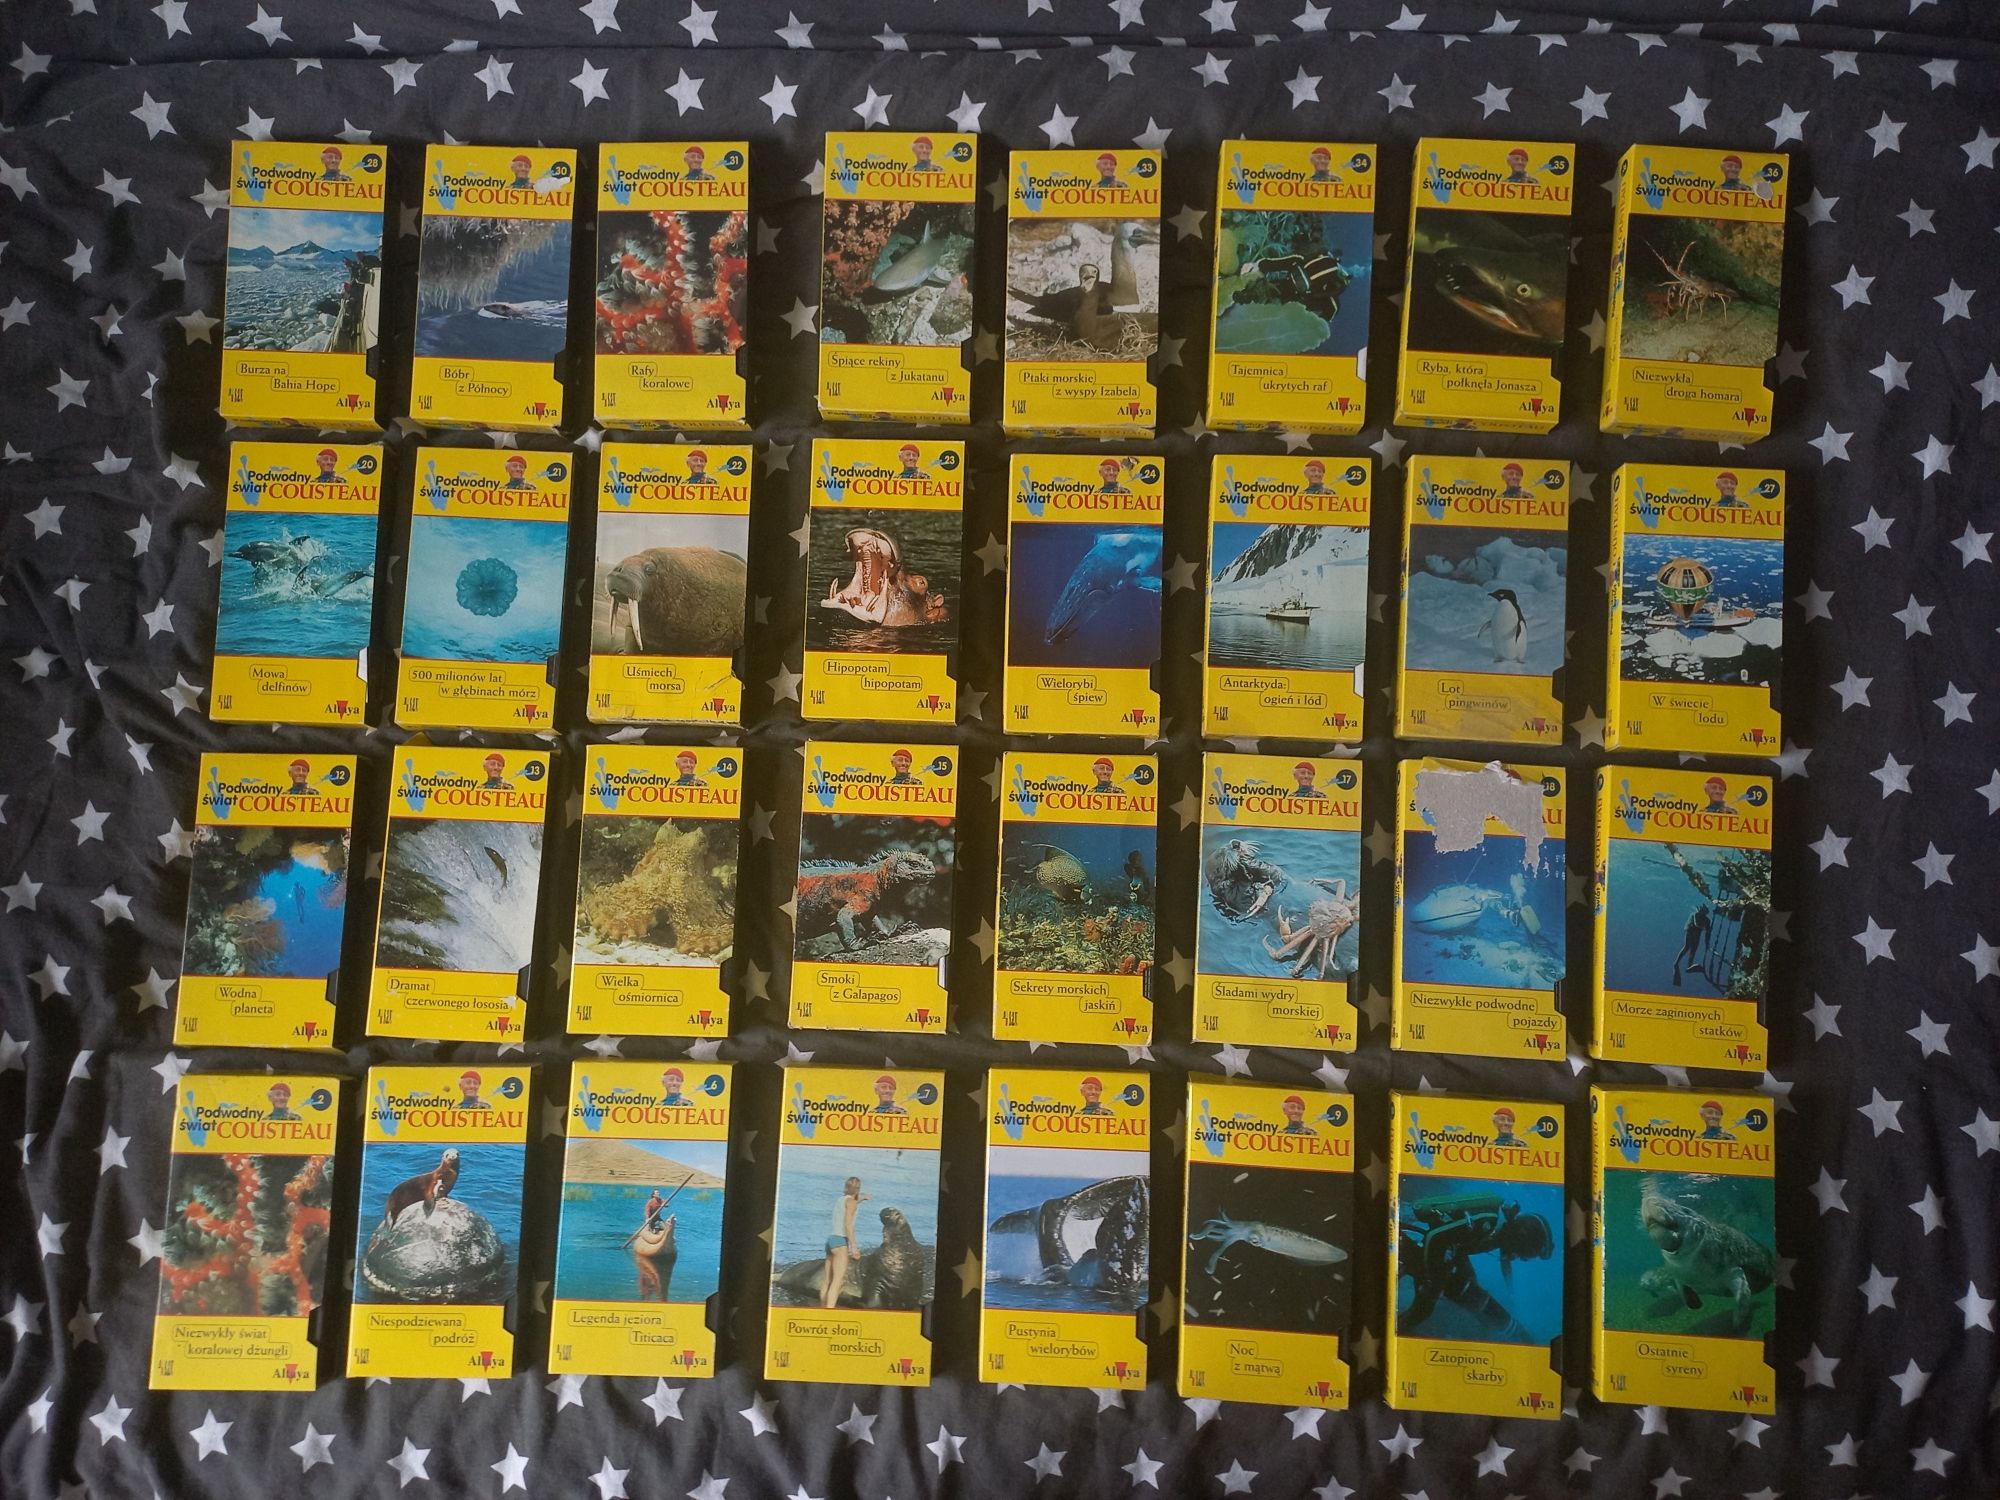 Kasety VHS Podwodny świat Cousteau